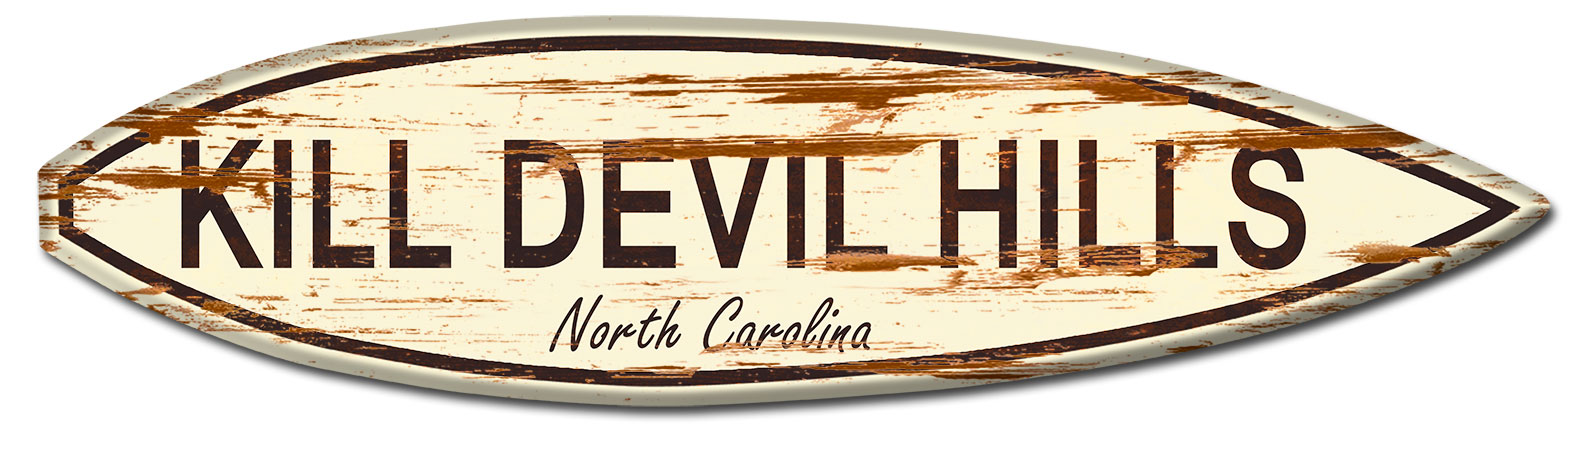 Kill Devil Hills Surf Board Wood Print Vintage Sign